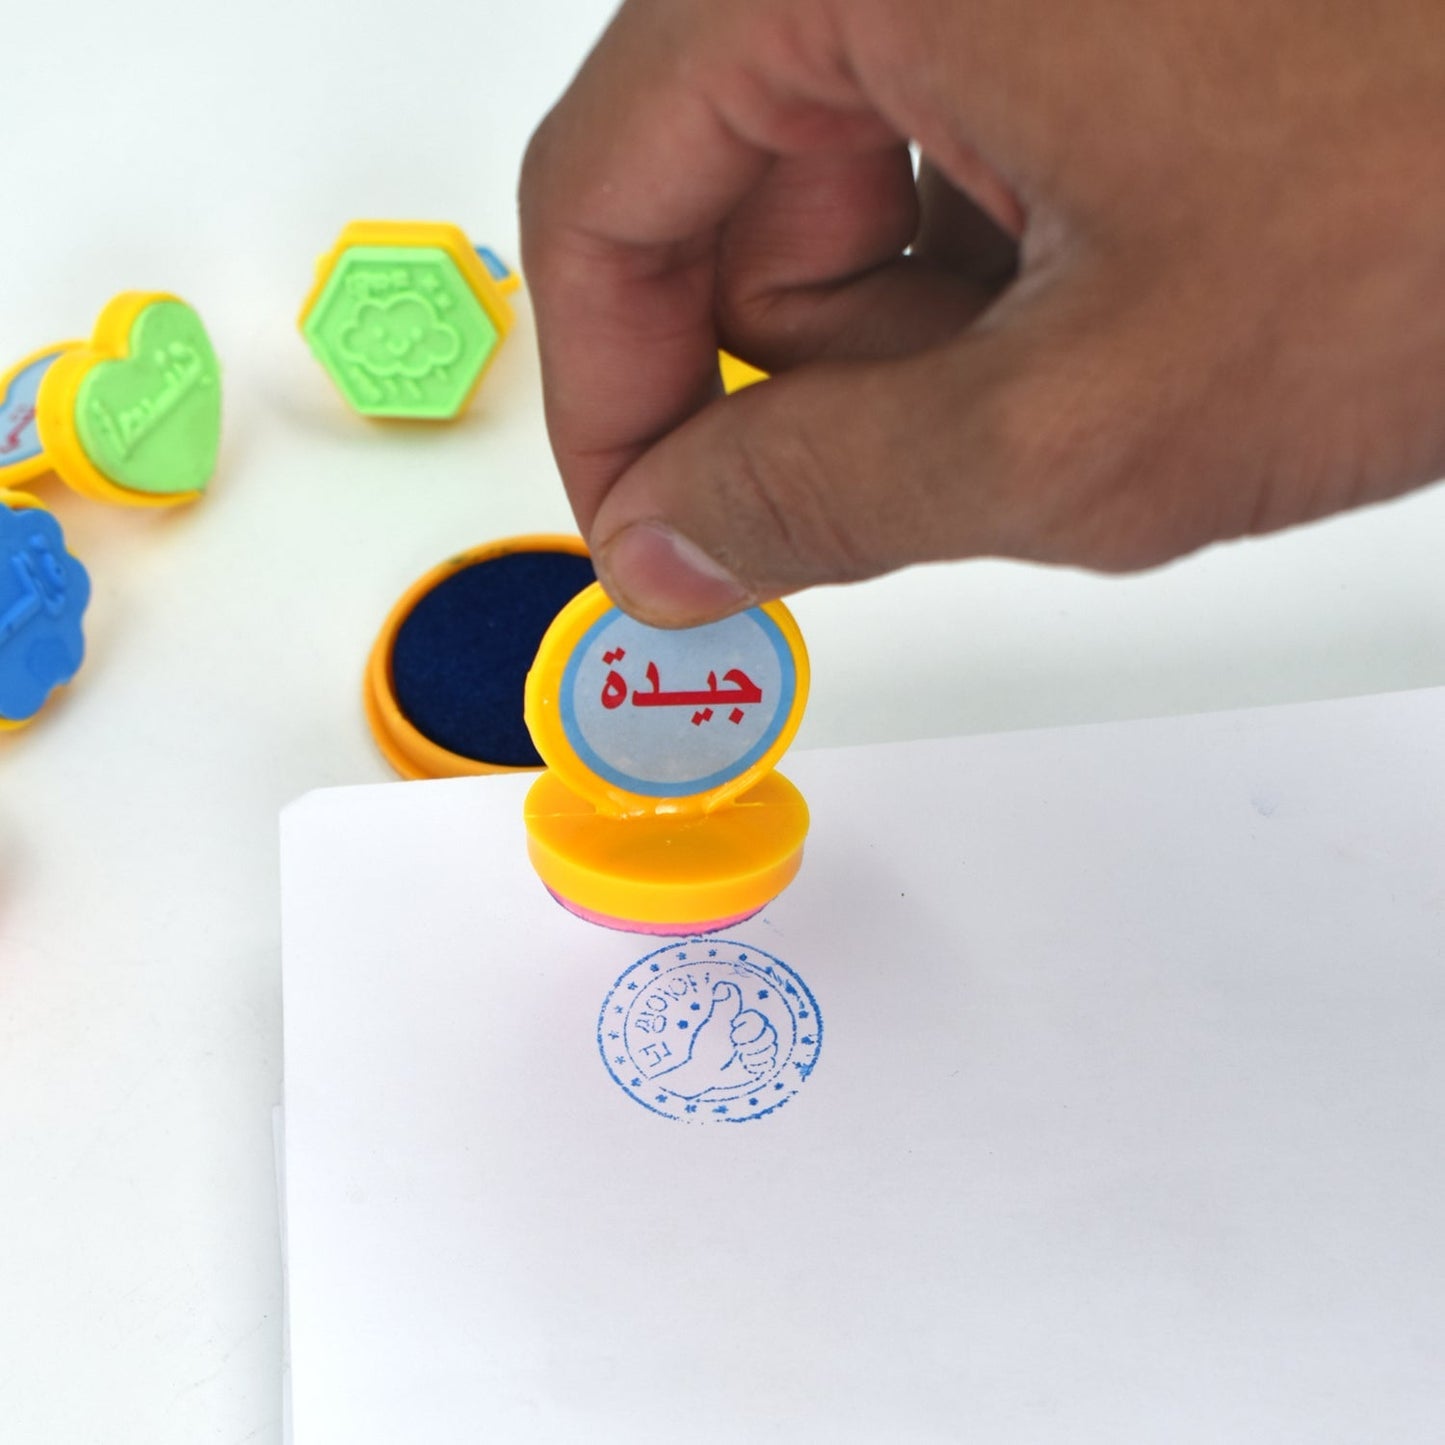 Unique Different Shape Stamps 7 pieces for Kids Motivation and Reward Theme Prefect Gift for Teachers, Parents and Students (Multicolor)